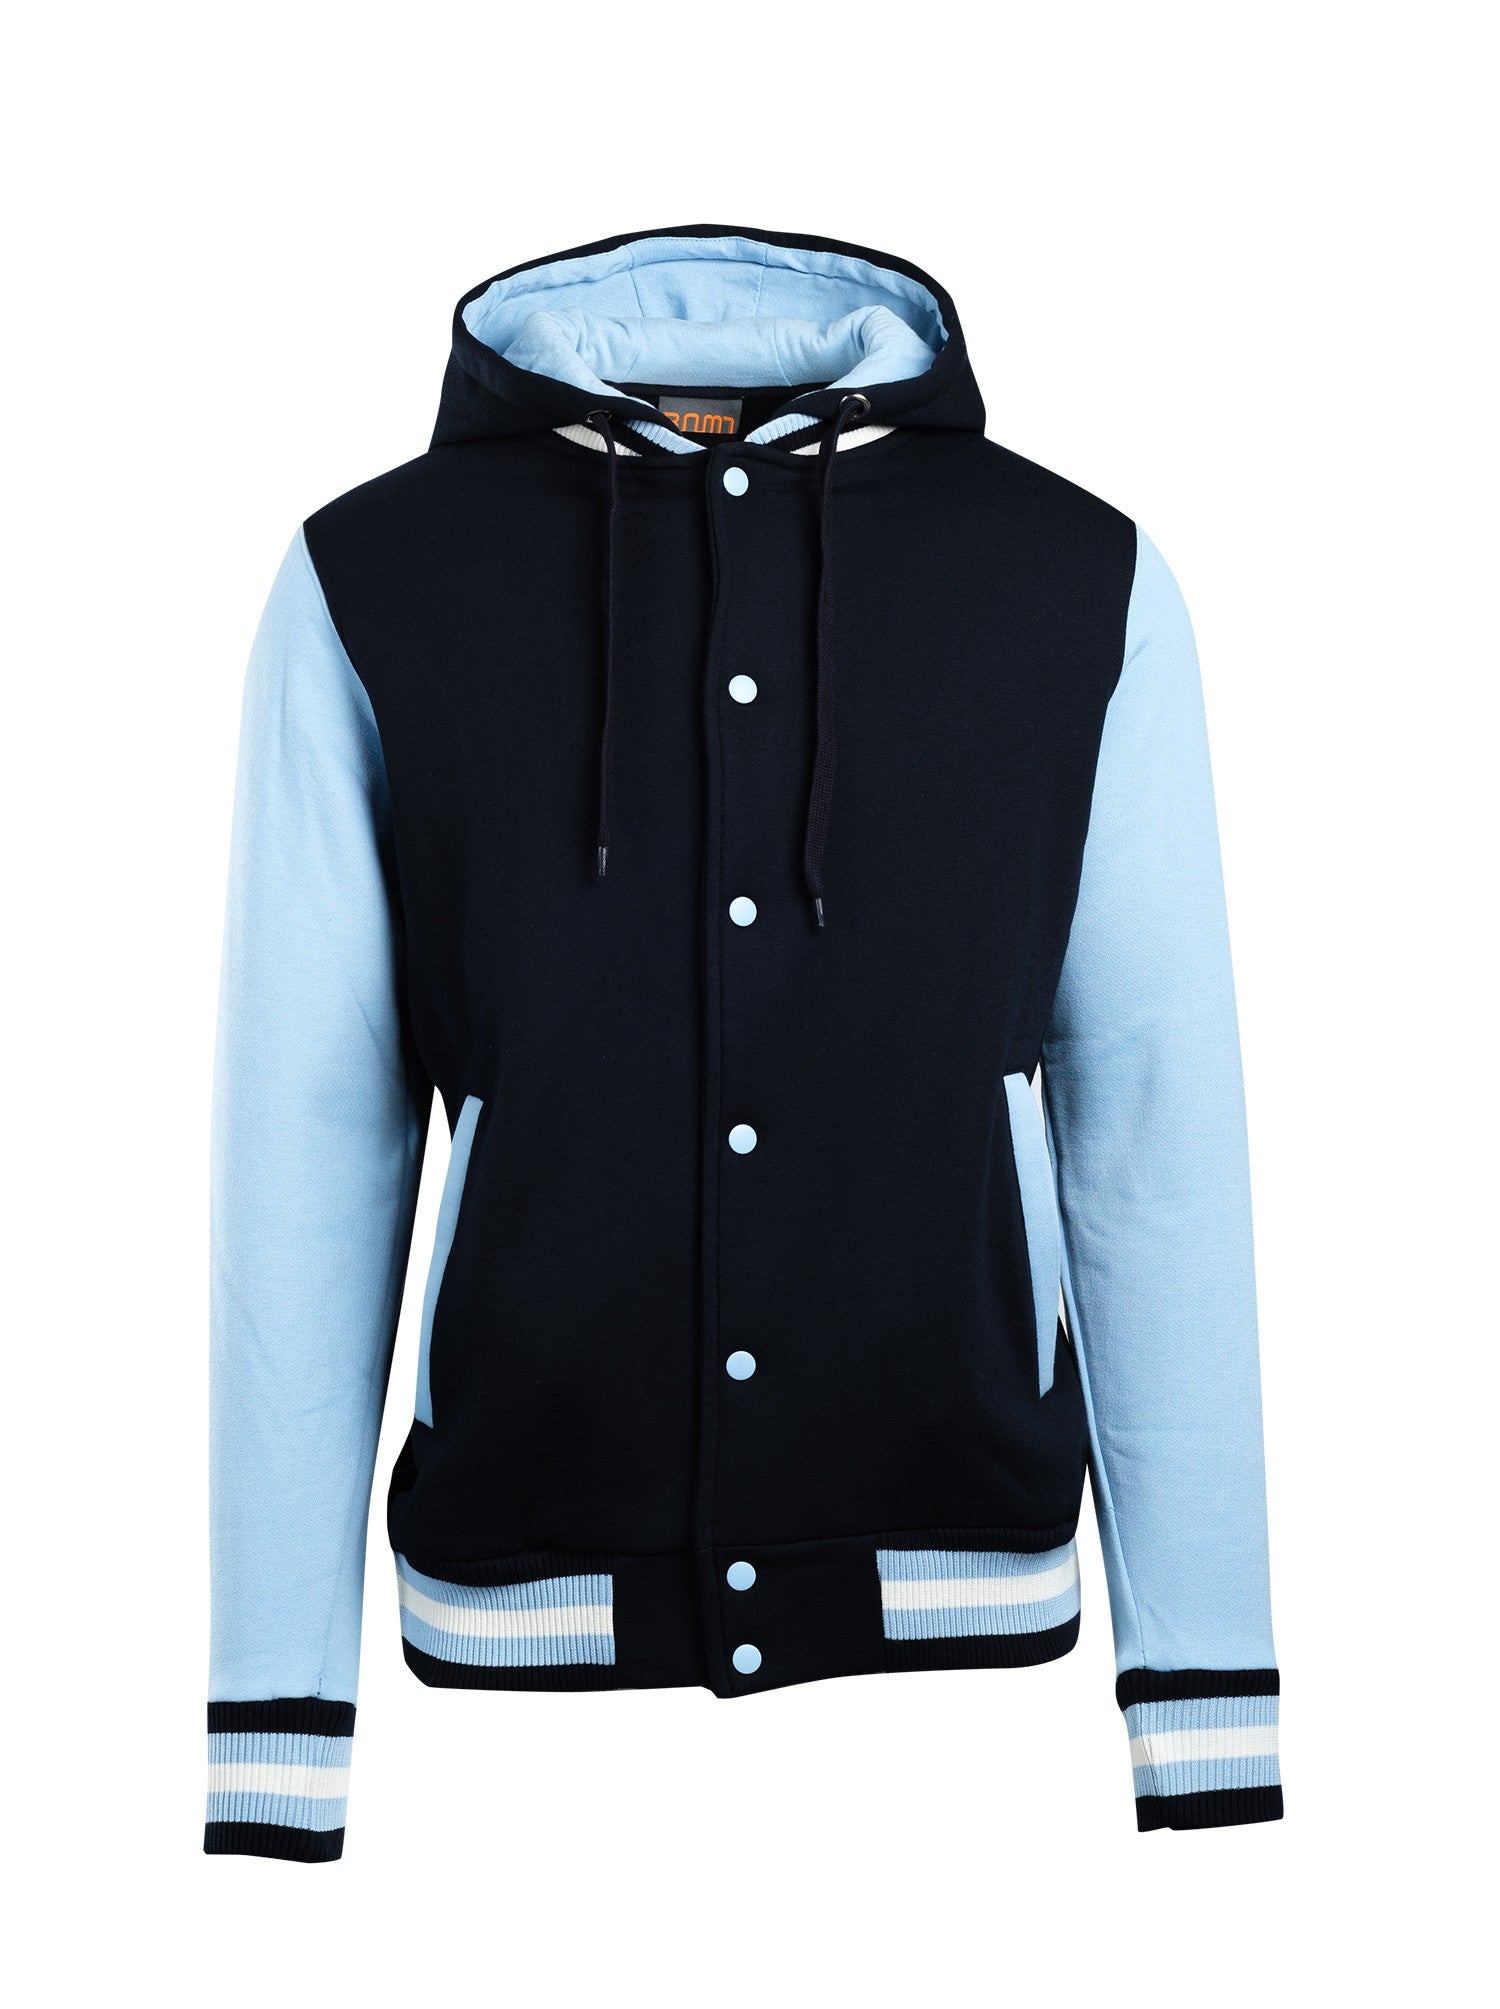 Ramo Men's Varsity Jacket & Hood (F907HB)